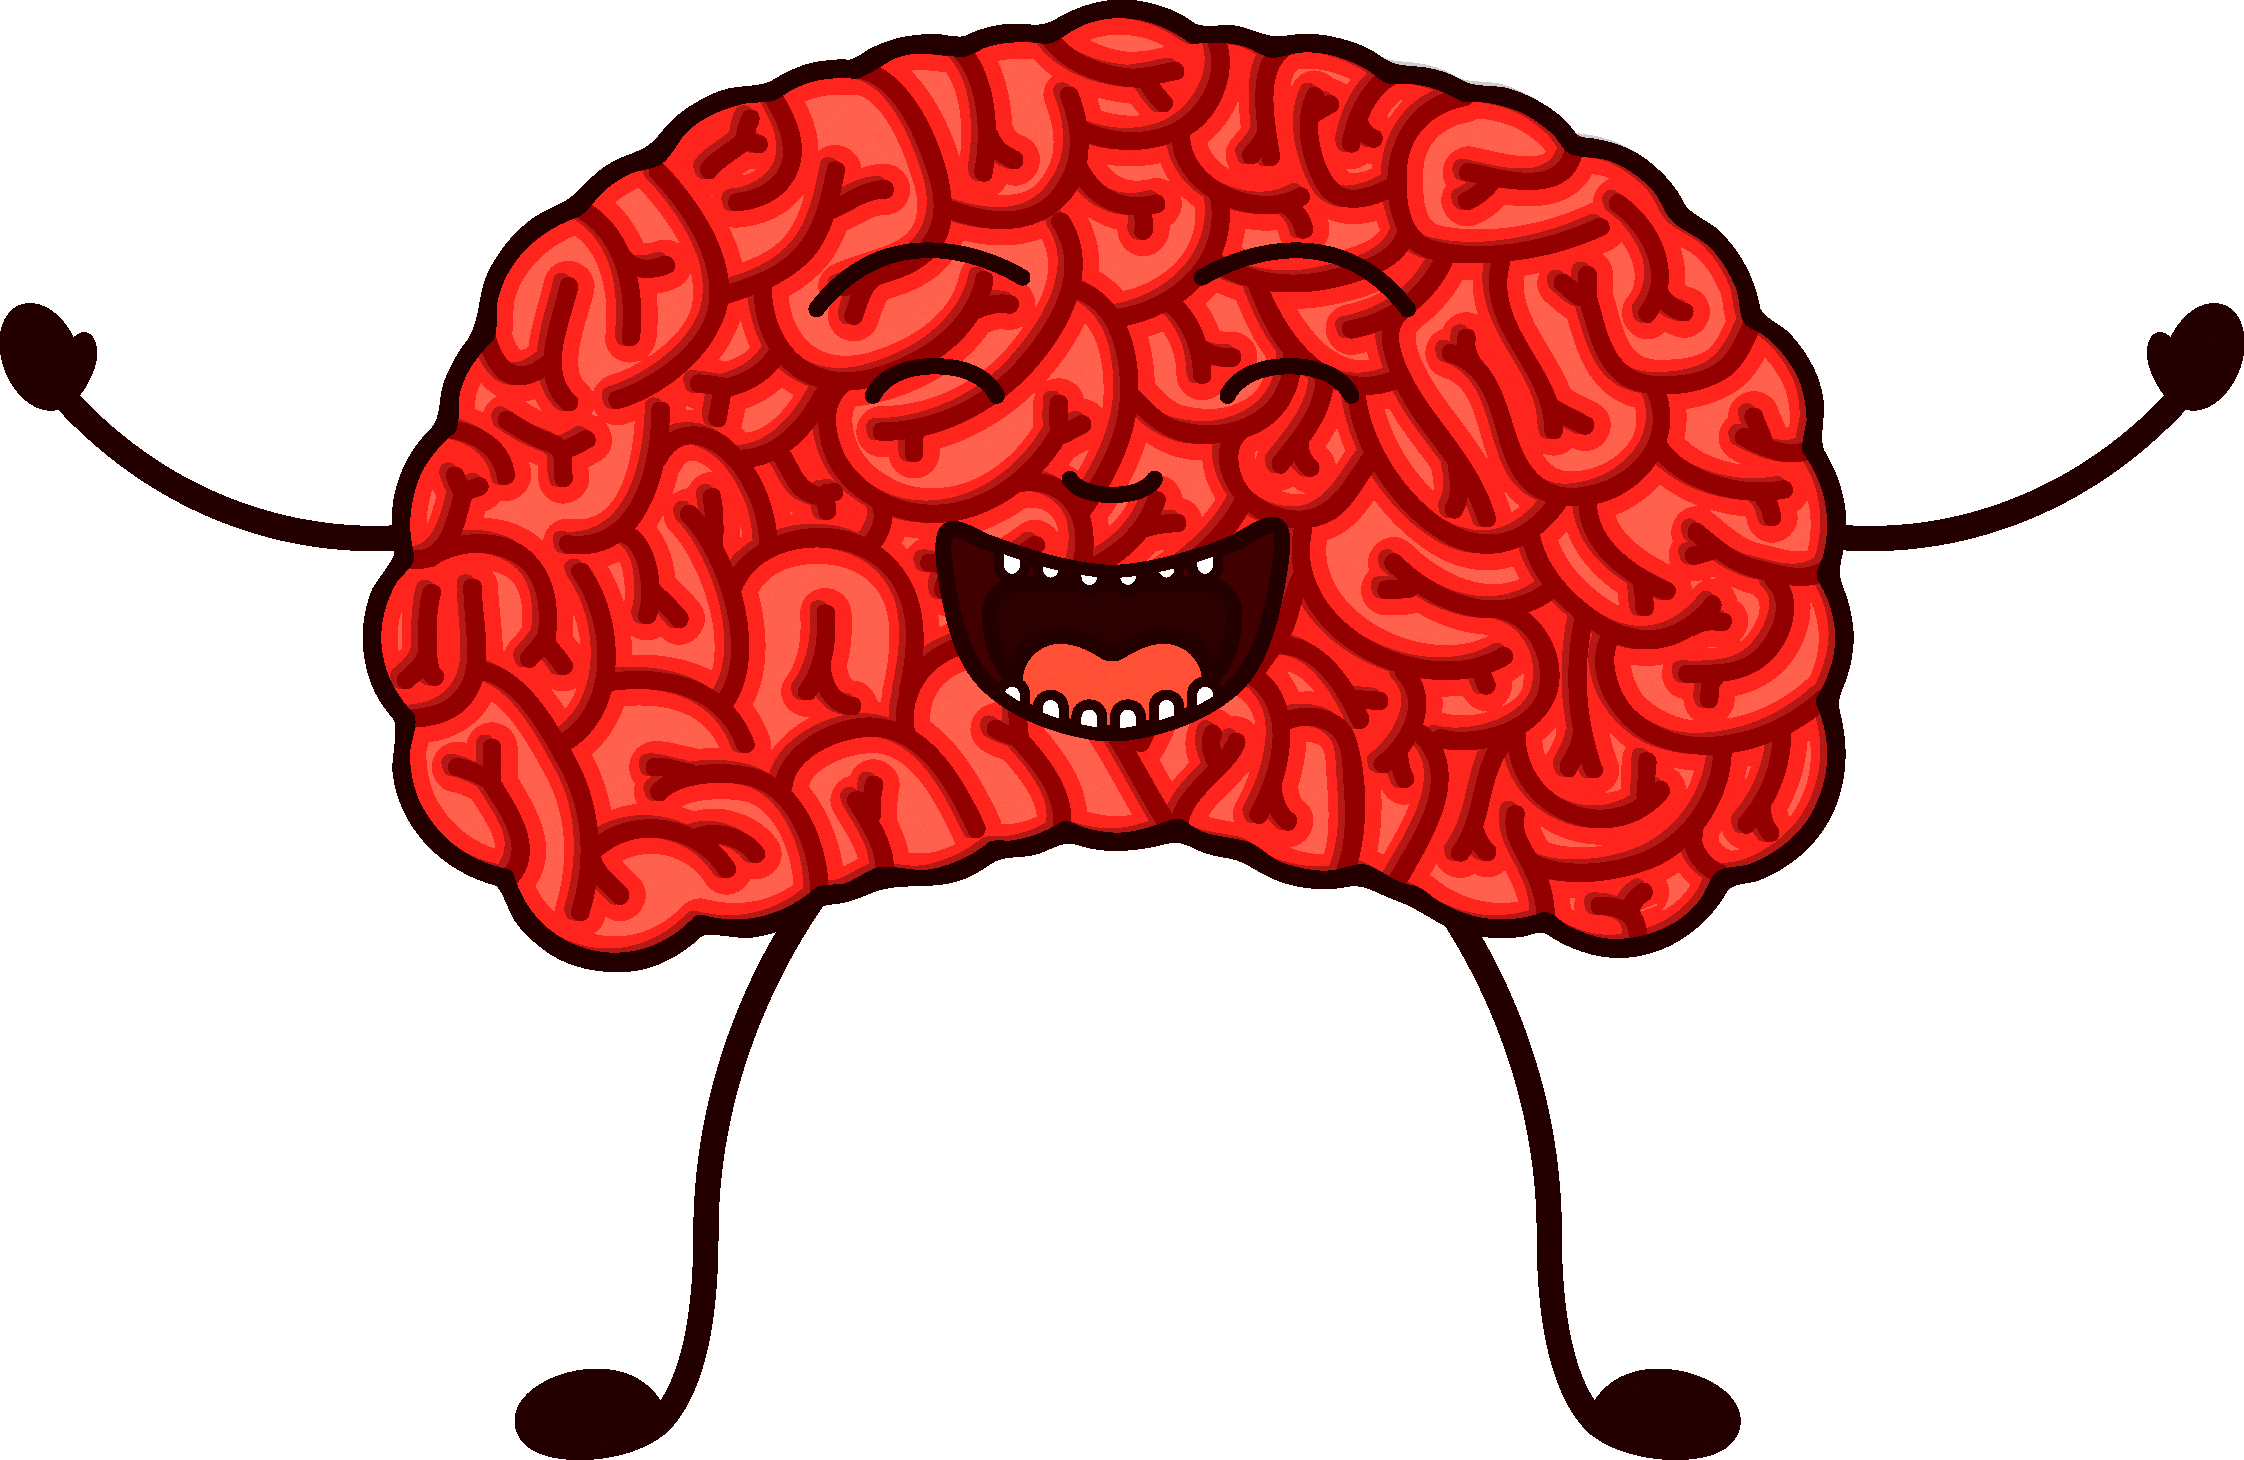 Brain download. Мозг нарисованный. Мозг рисунок. Мозг на прозрачном фоне.